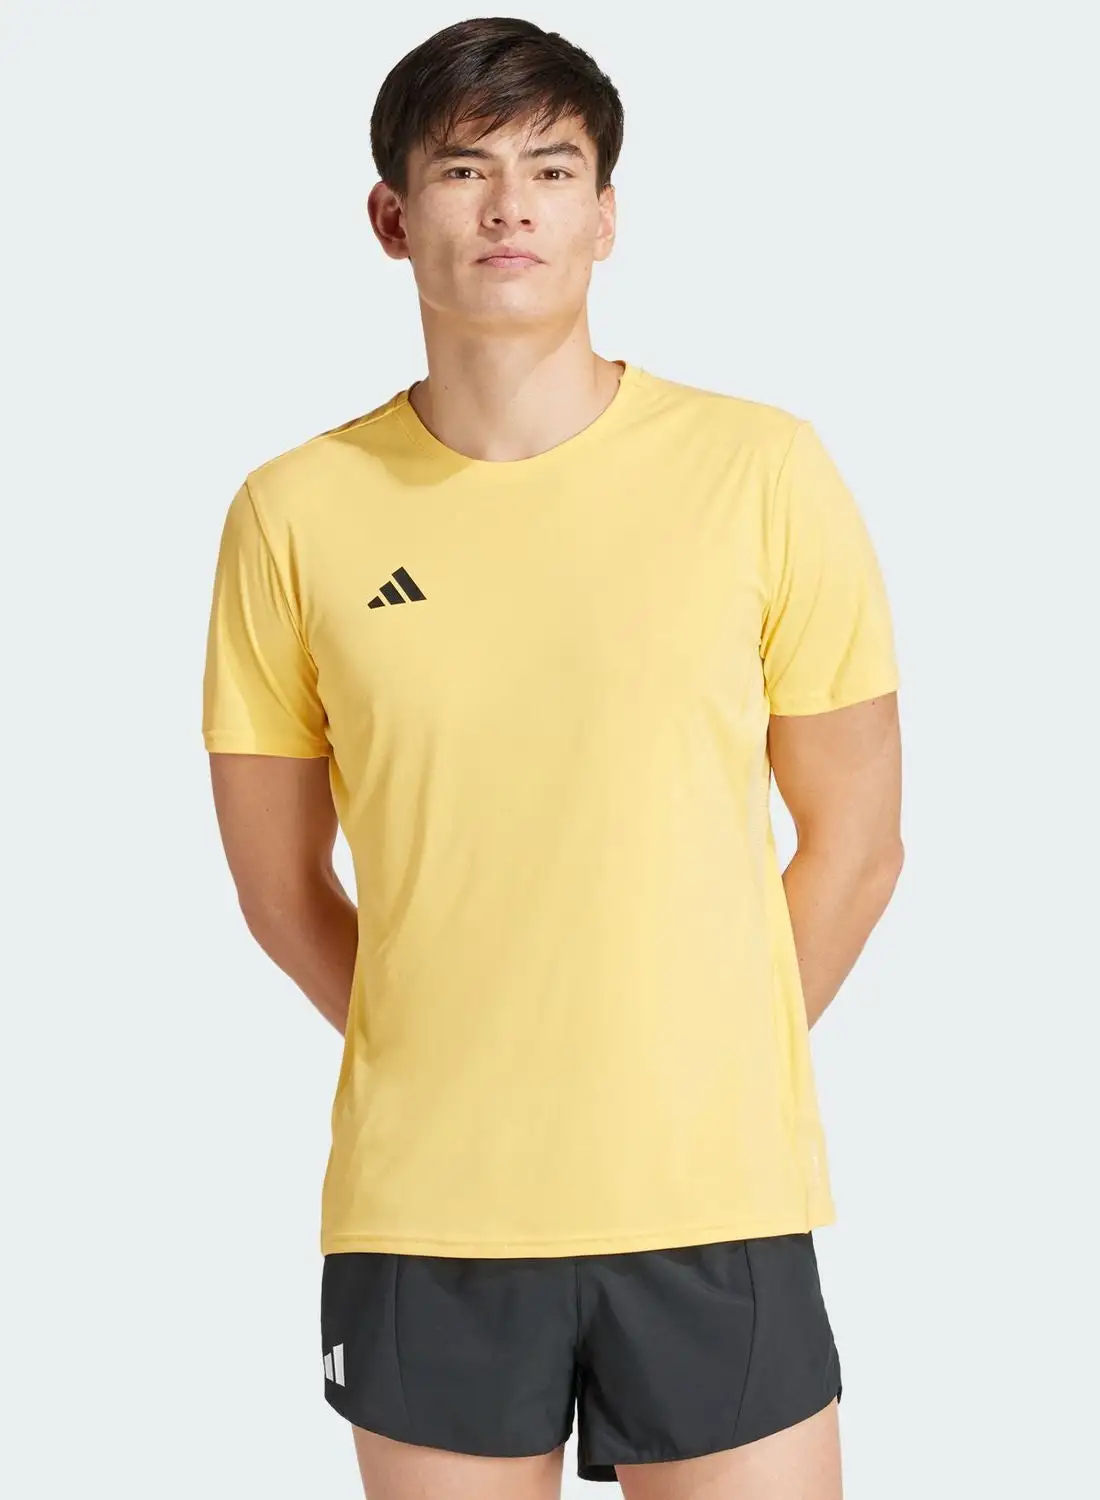 Adidas Adizero Essential T-Shirt